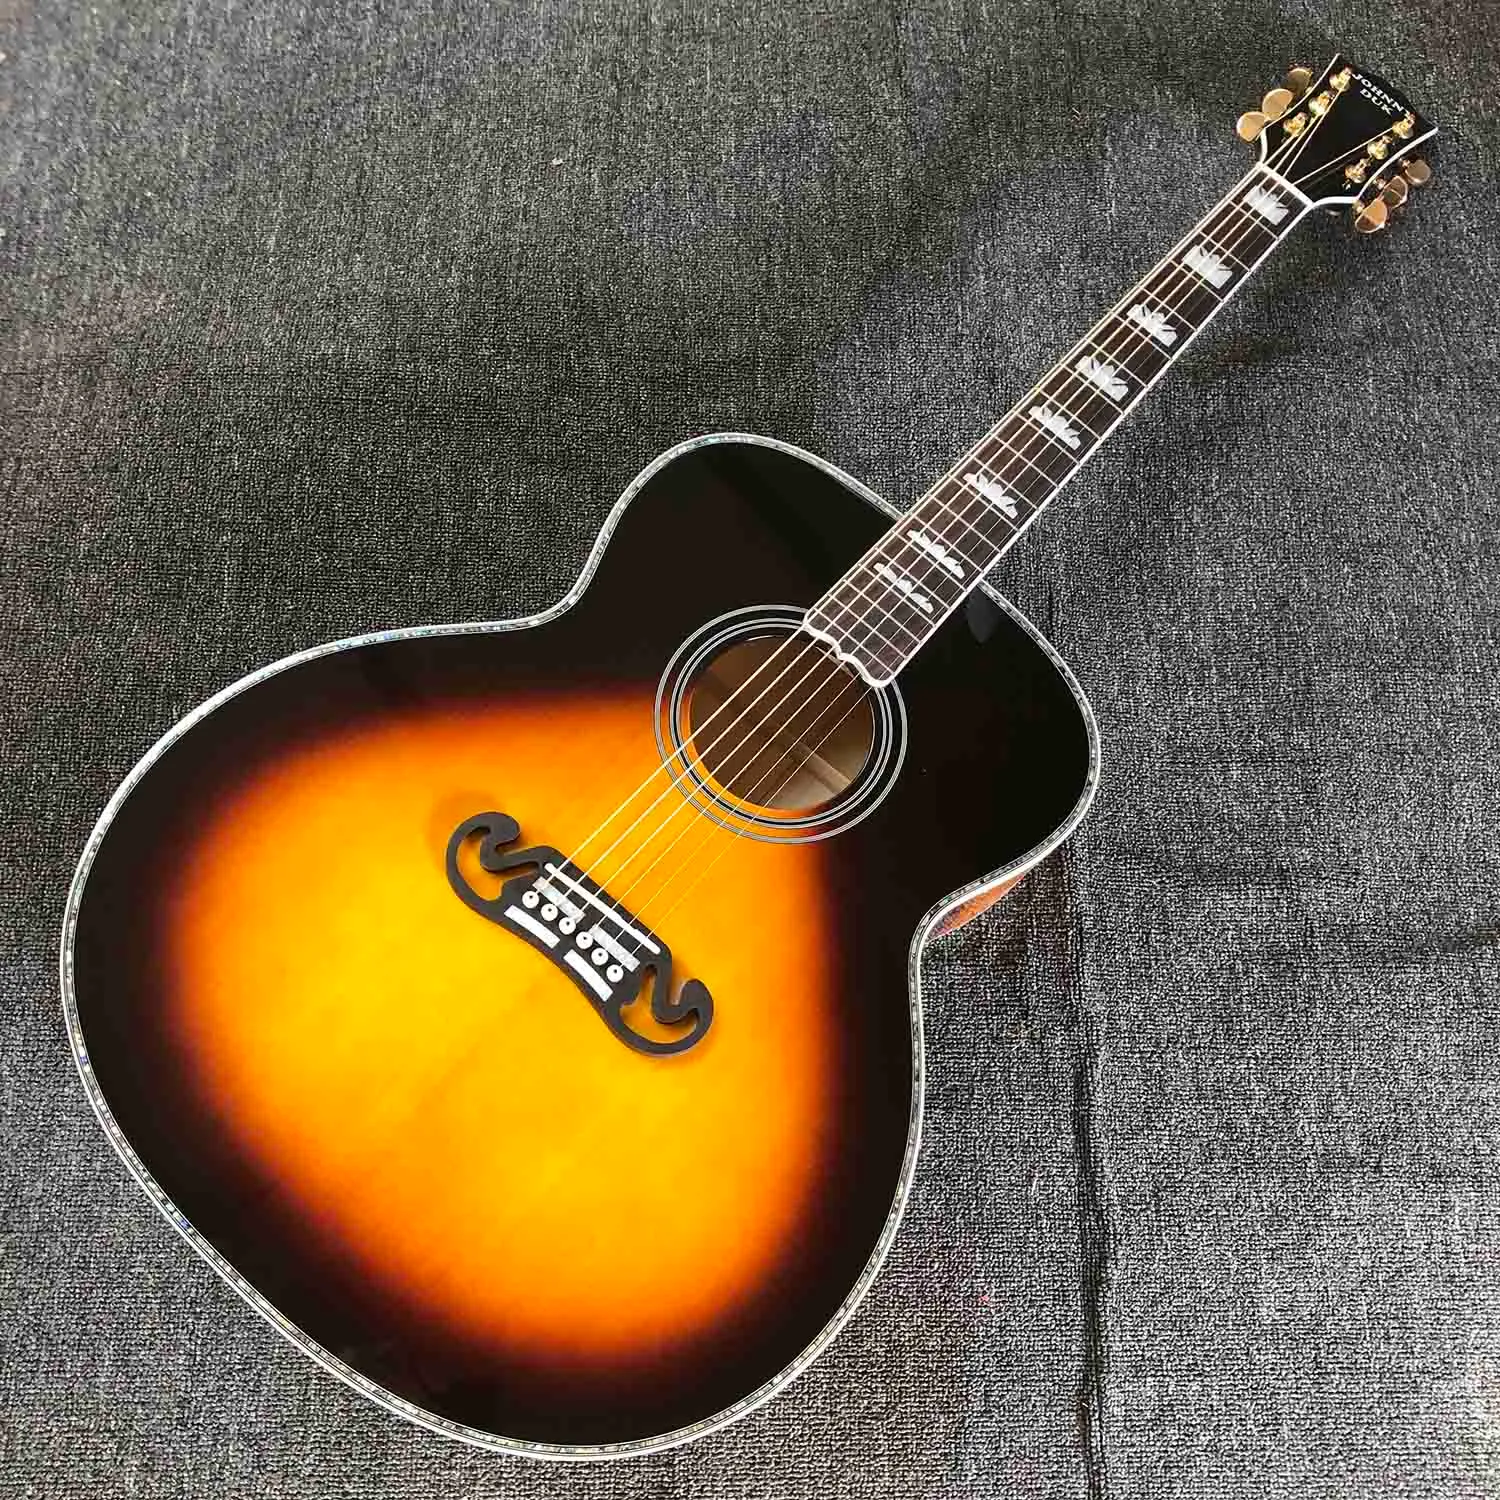 43 "Sunburst Flame Maple Guitarra acústica Diapotado de palisandro Spruce sólido Jumbo Cuerpo Guitarra eléctrica